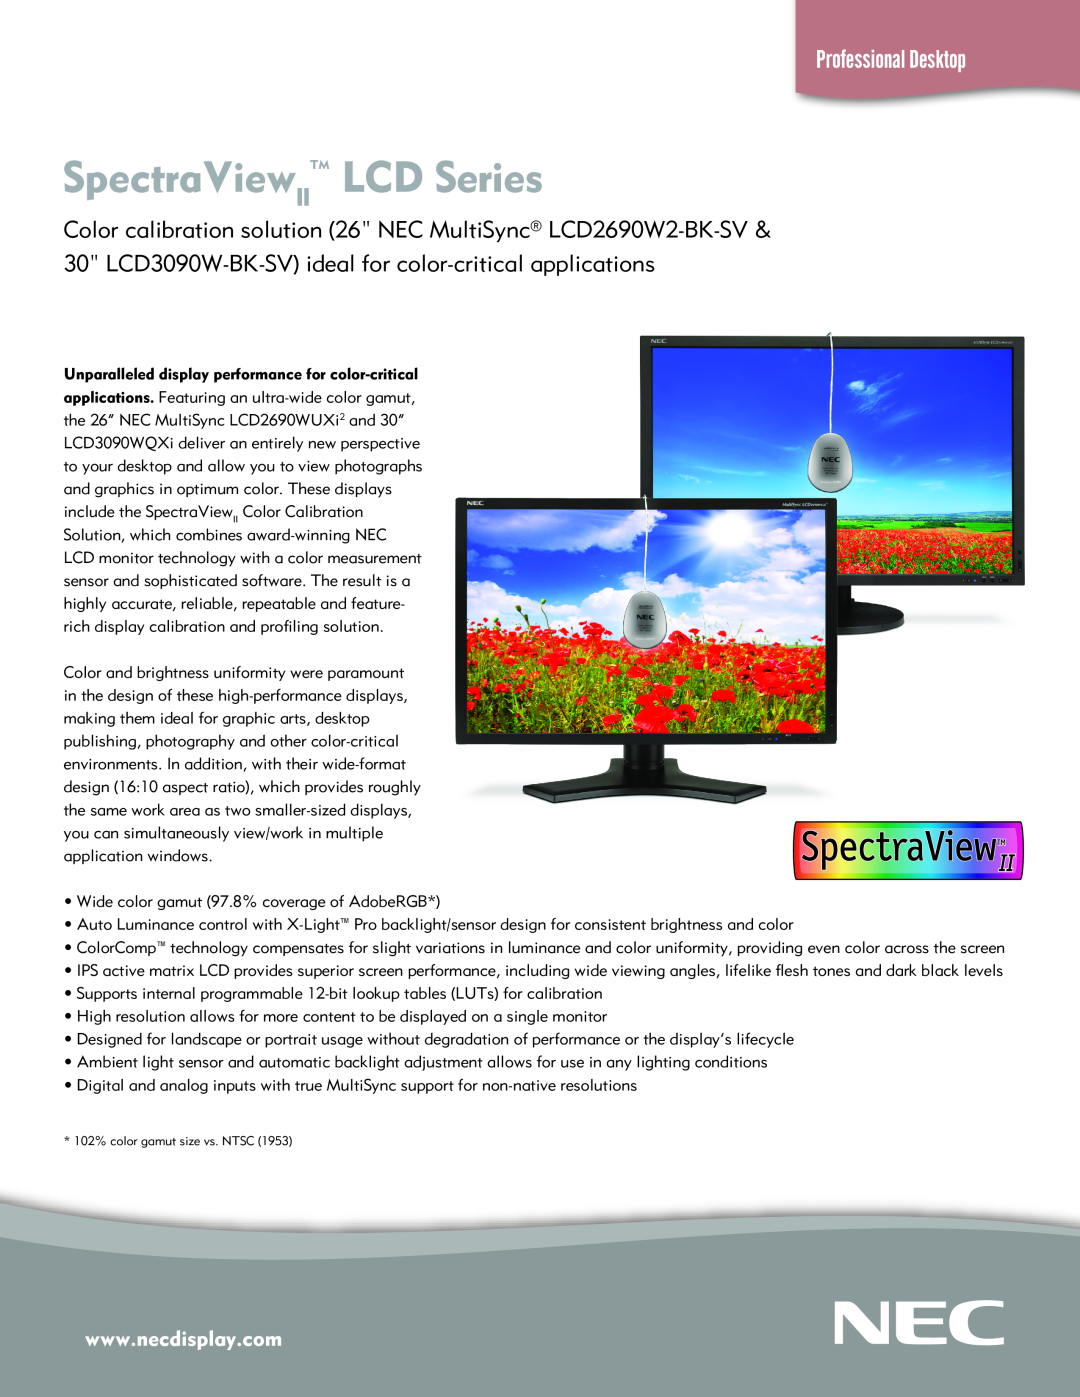 NEC LCD2690W2-BK-S, LCD3090W-BK-SV manual SpectraViewIITM LCD Series, Professional Desktop 